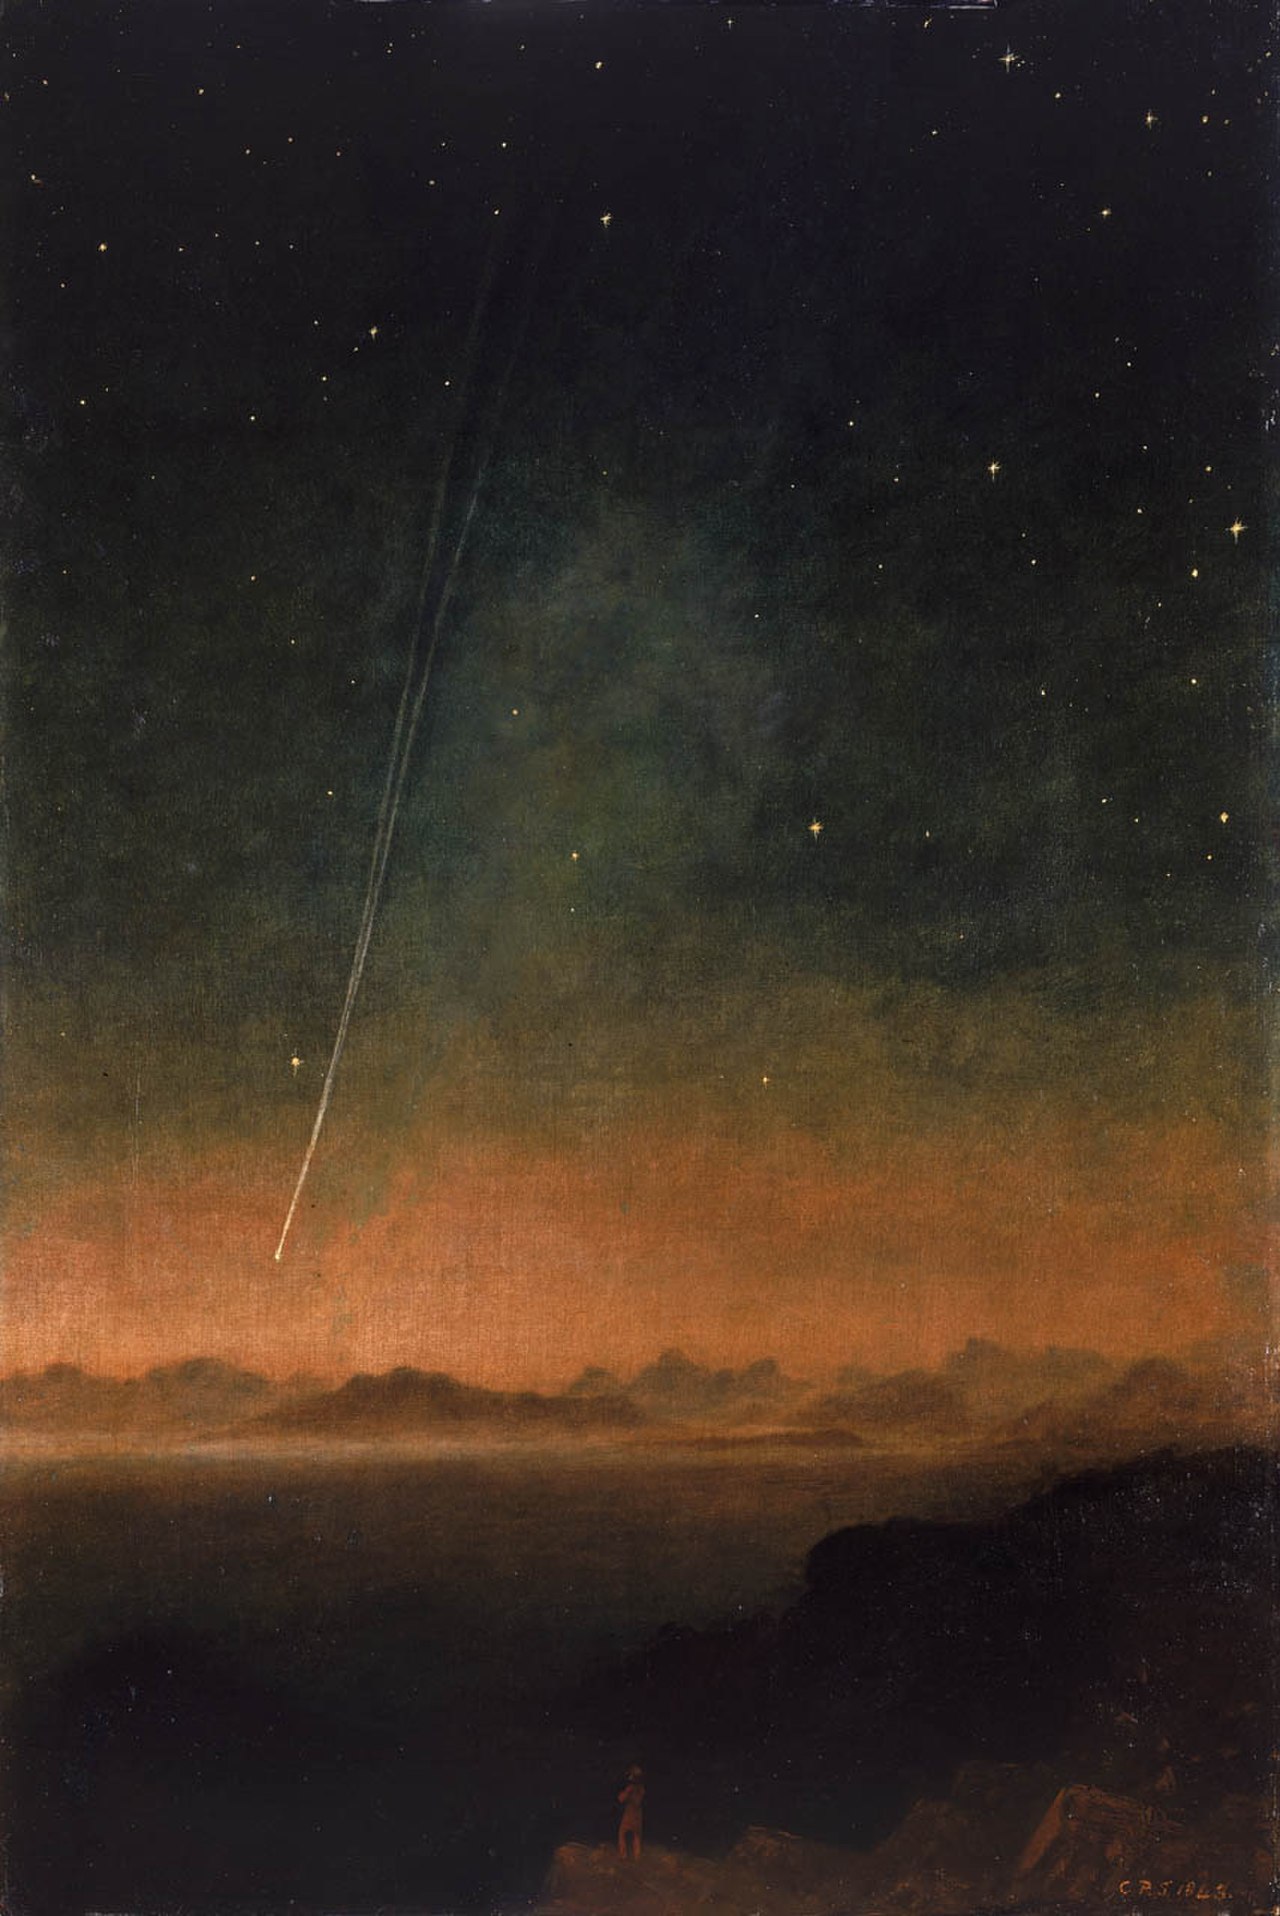 La grande comète de 1843 by Charles Piazzi Smyth - 1843 - 105,2 x 75,3 cm 